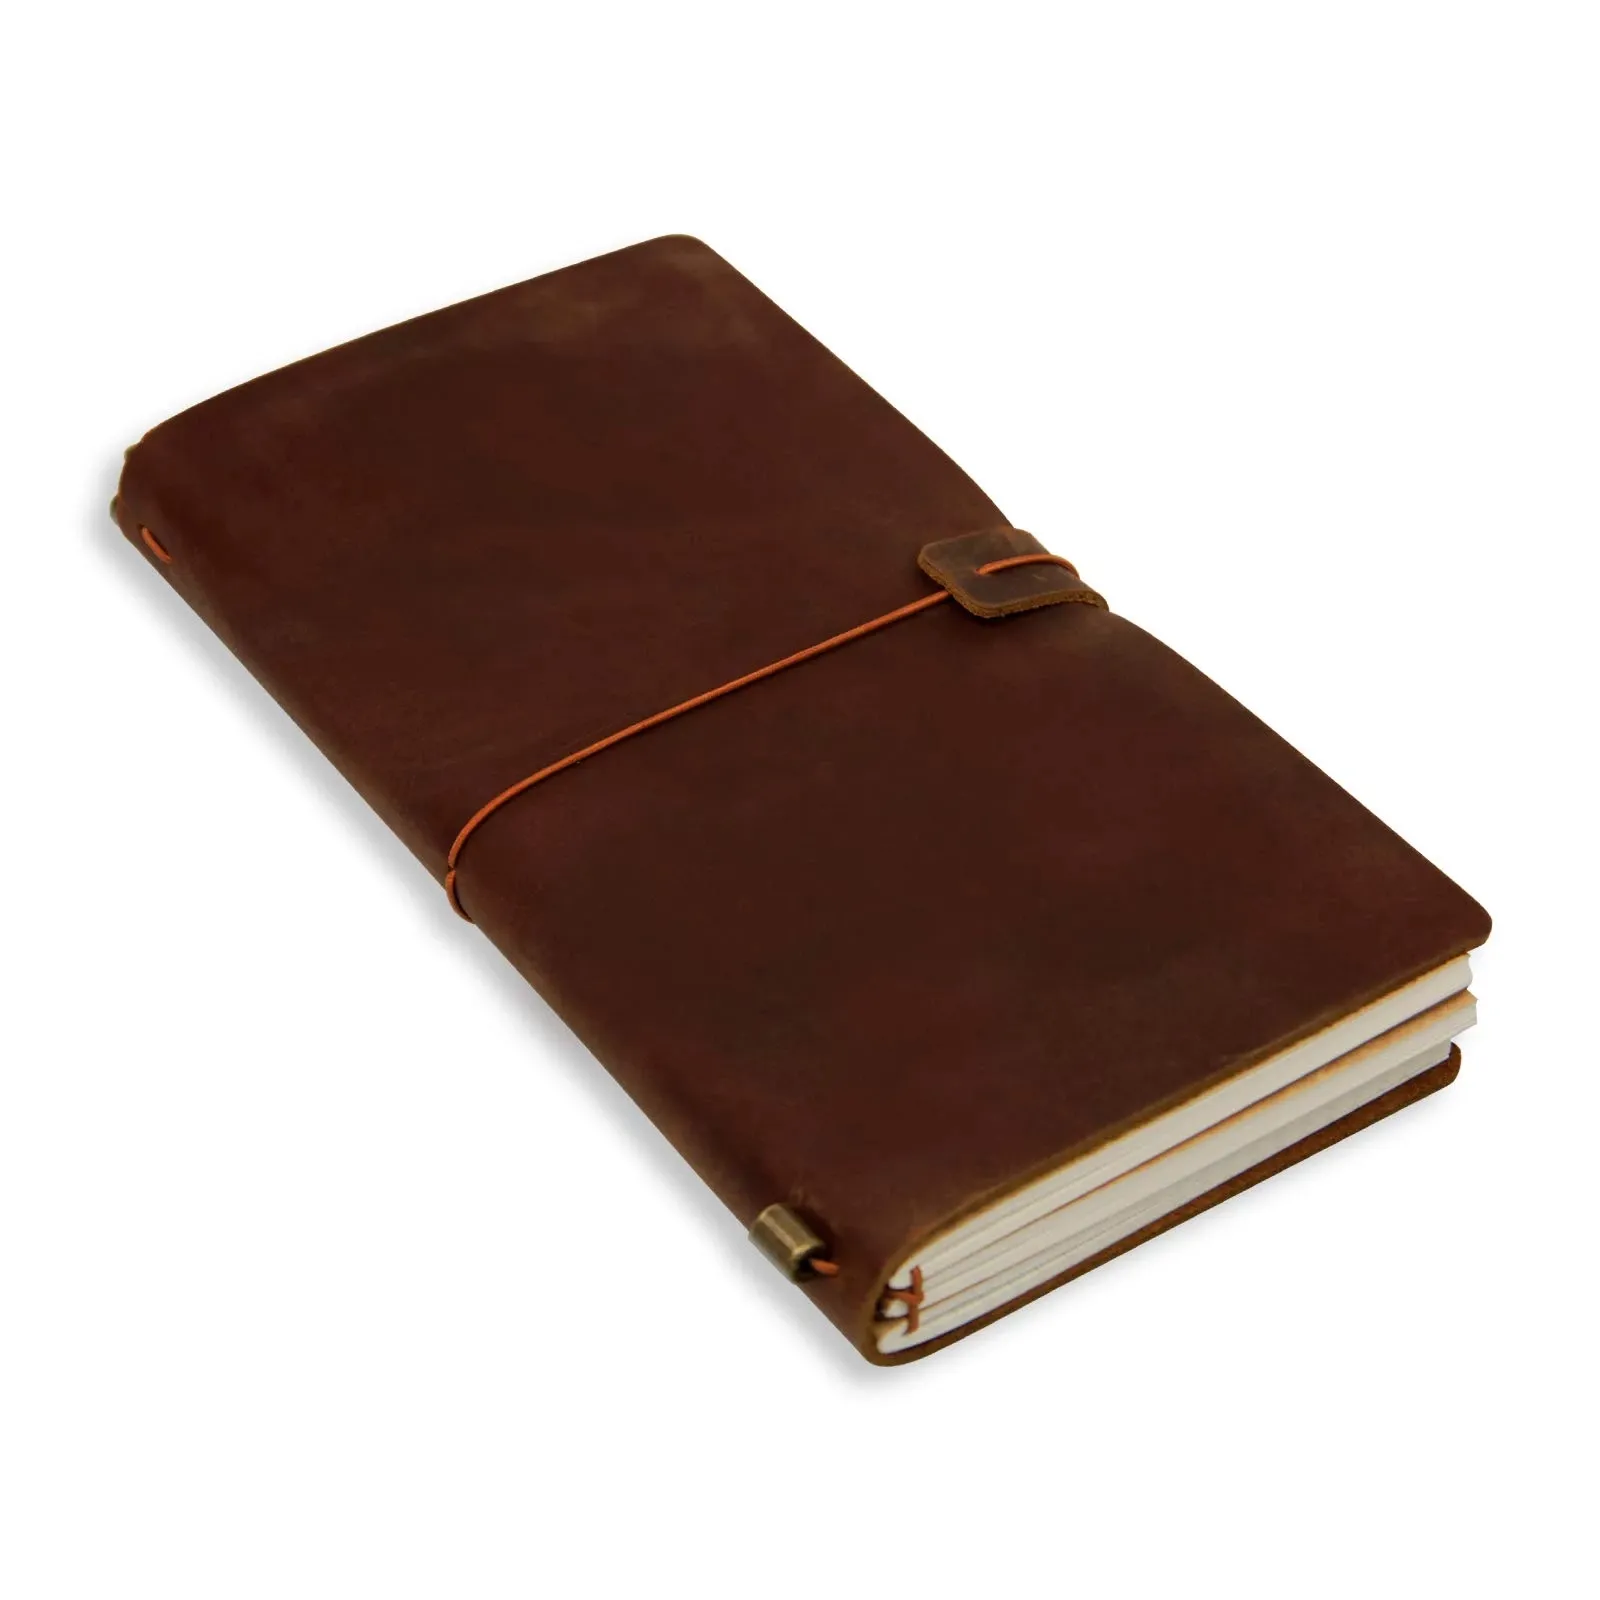 OEM kulit kuda gila buku harian buatan tangan kulit asli dengan kertas buatan tangan penutup buku produk penyamakan sayuran